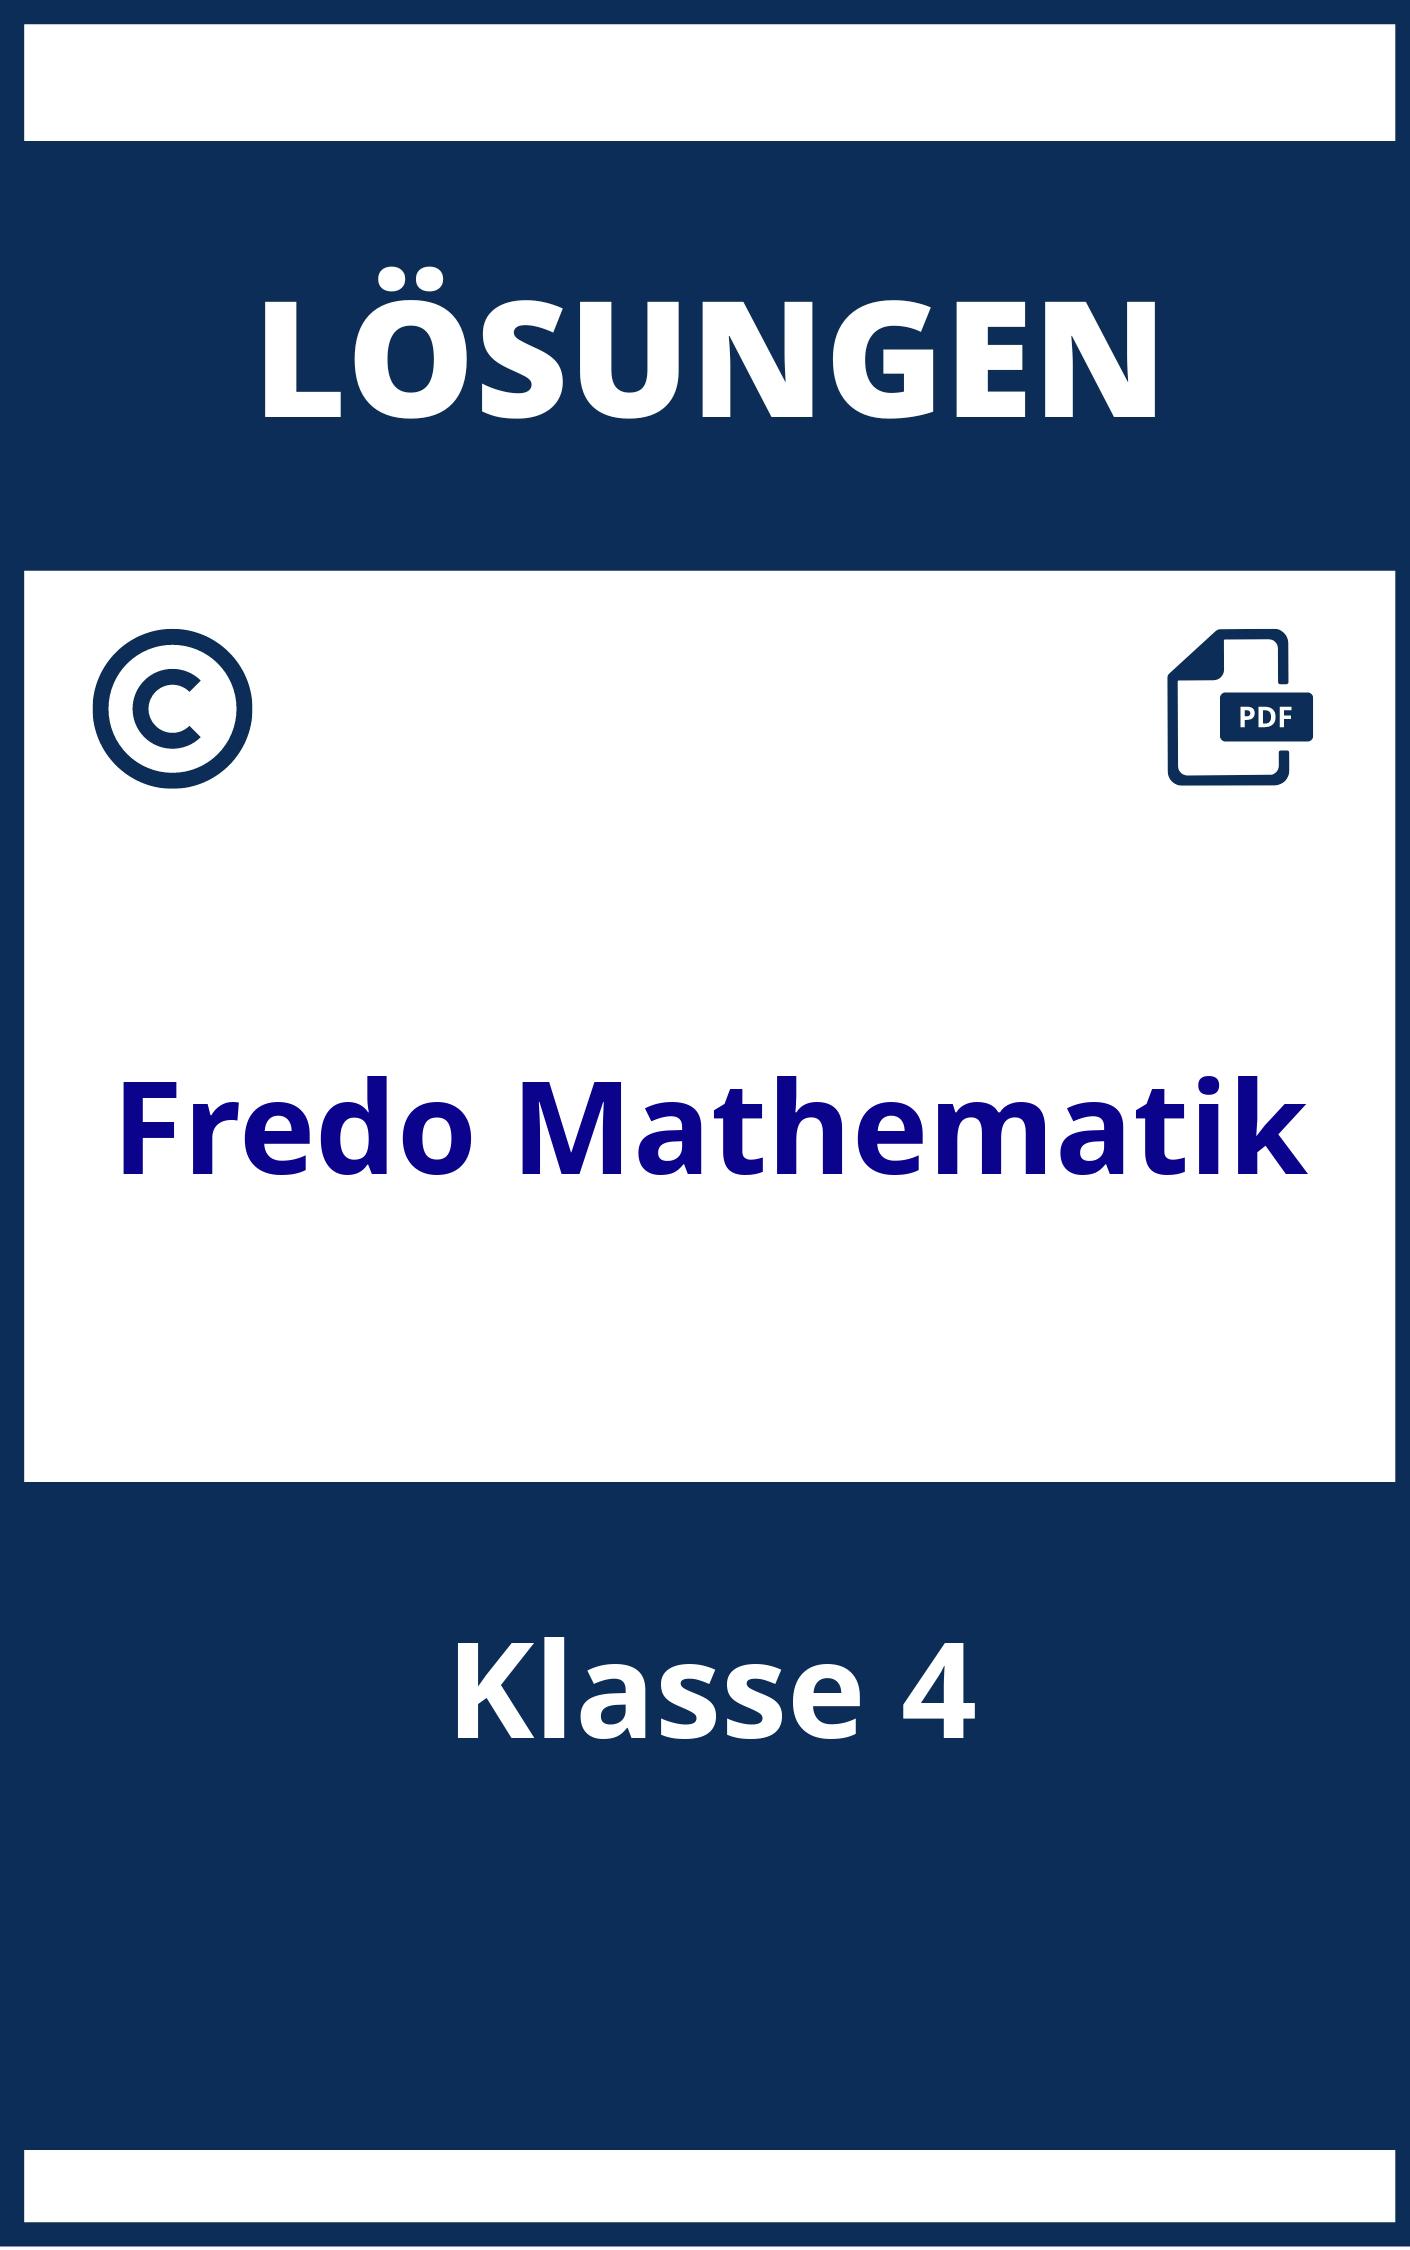 Fredo Mathematik 4 Klasse Lösungen